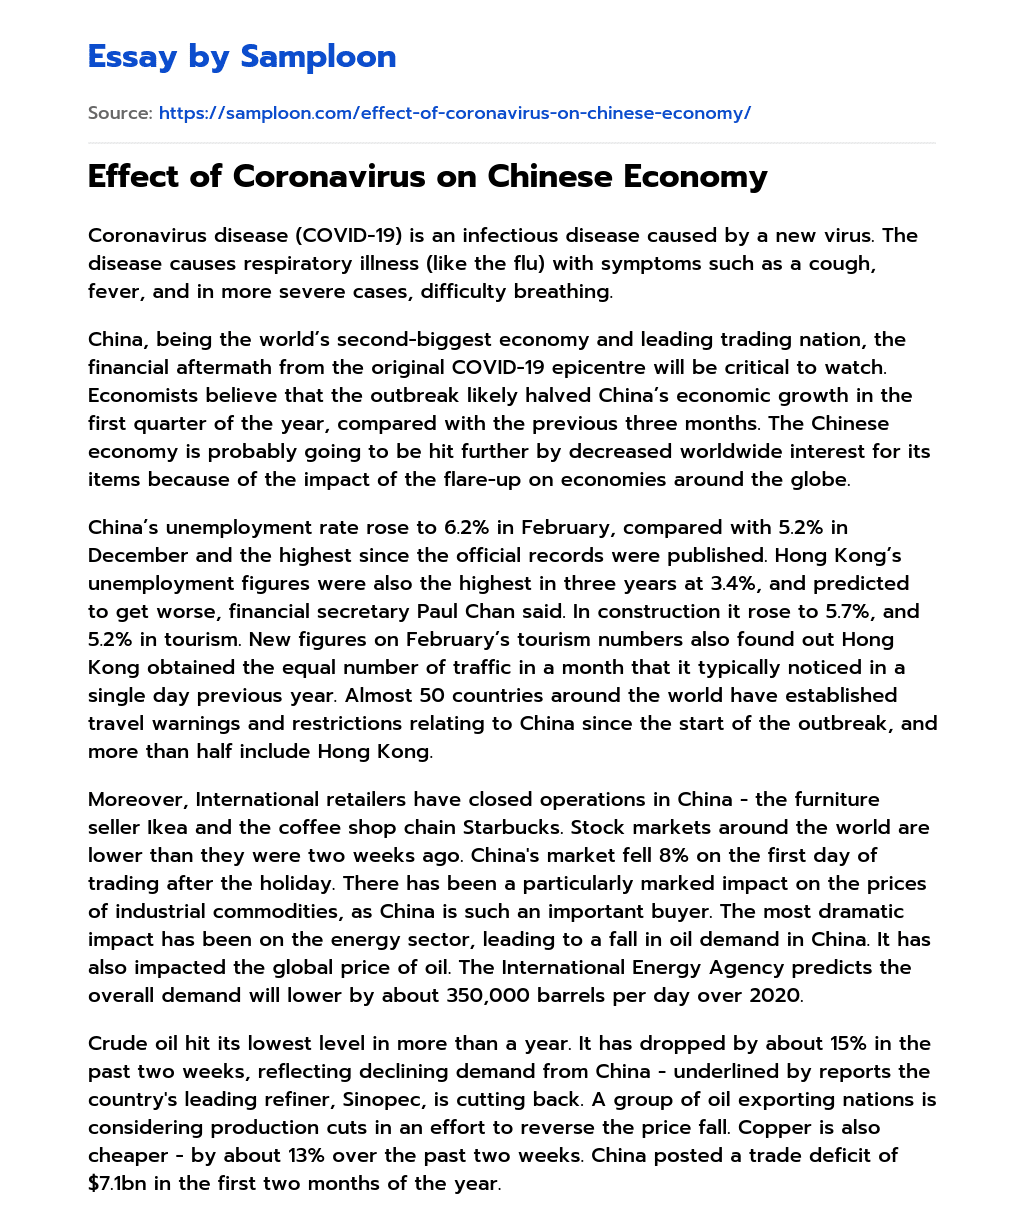 Effect of Coronavirus on Chinese Economy essay